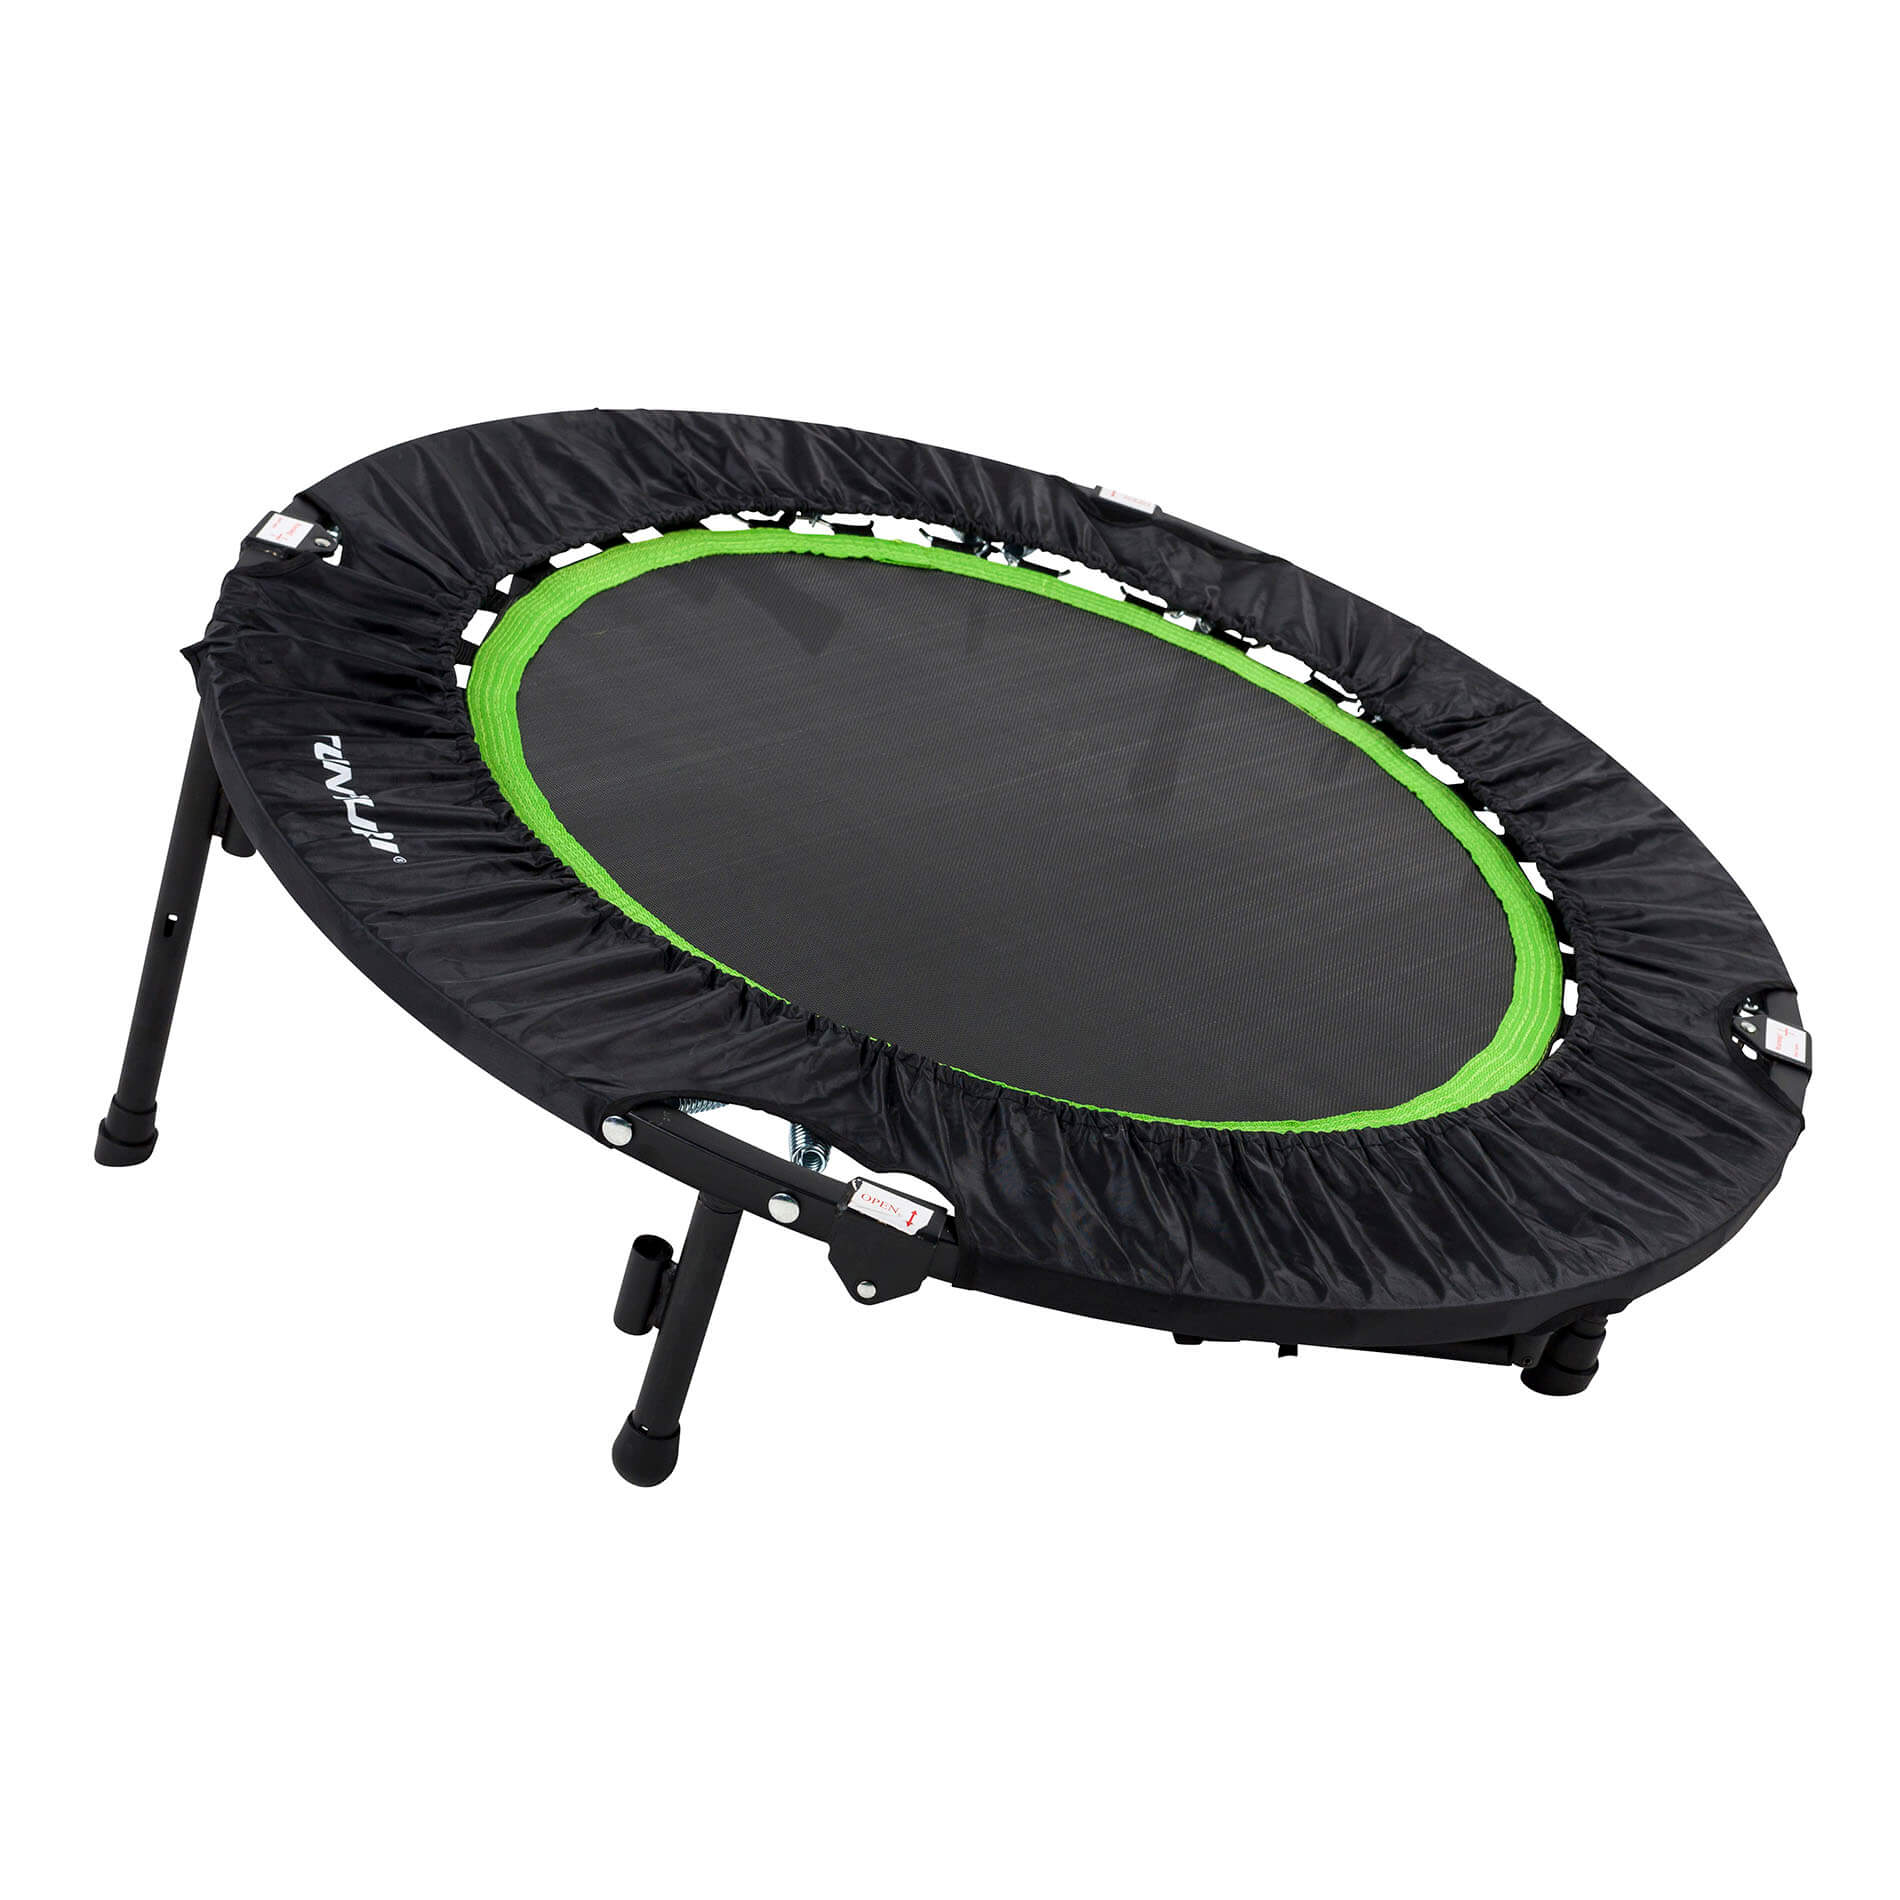 Trampoline - Bounce trampoline - 104 cm - Fitness